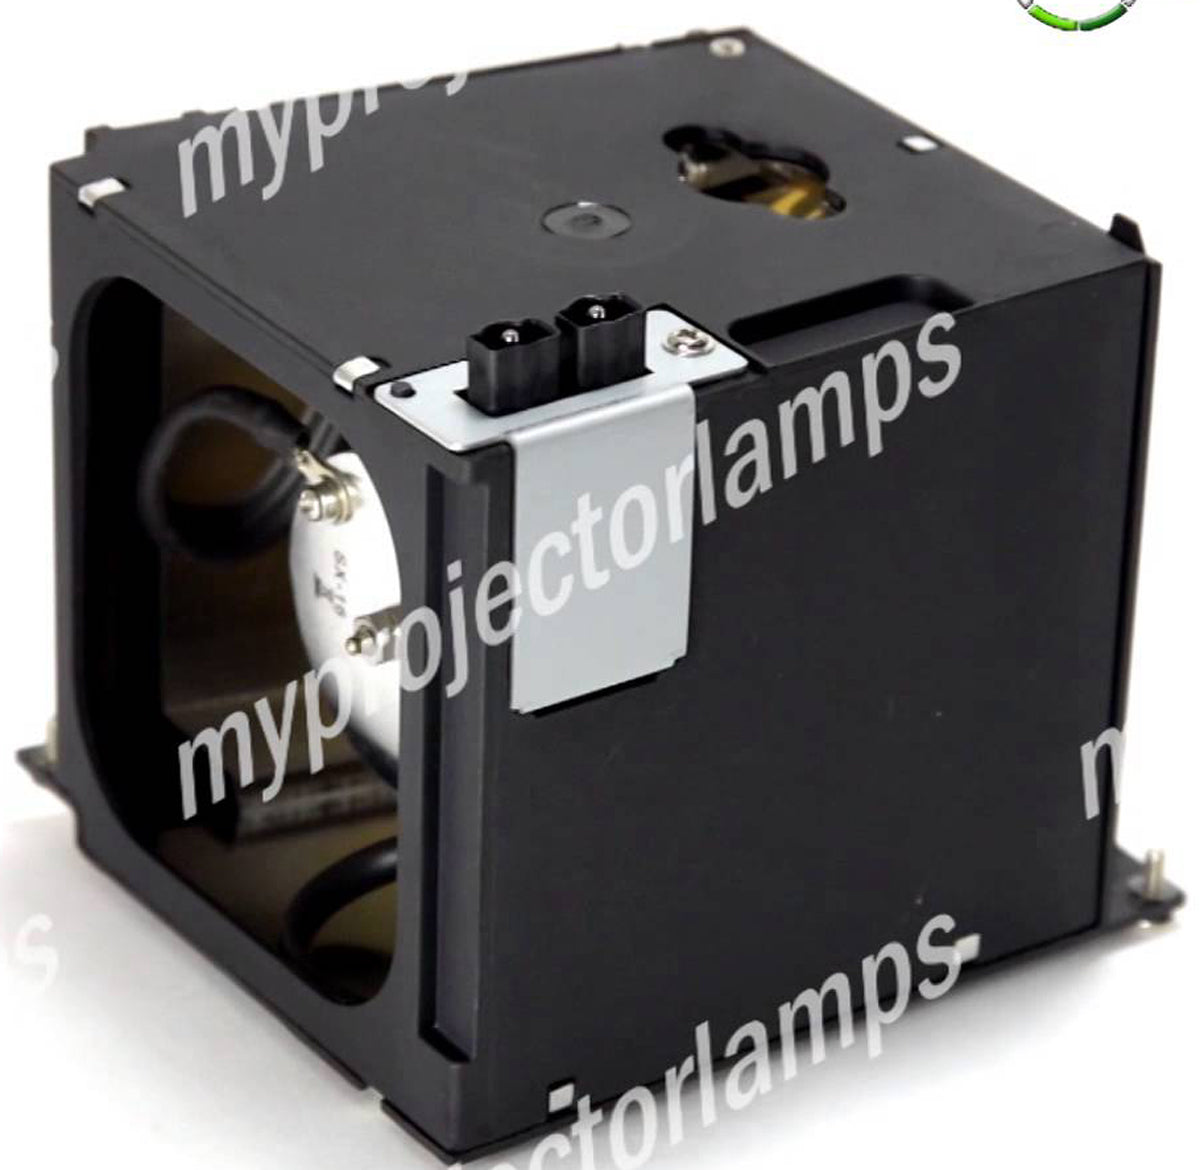 Runco 151-1041-00 Phoenix Projector Lamp Module